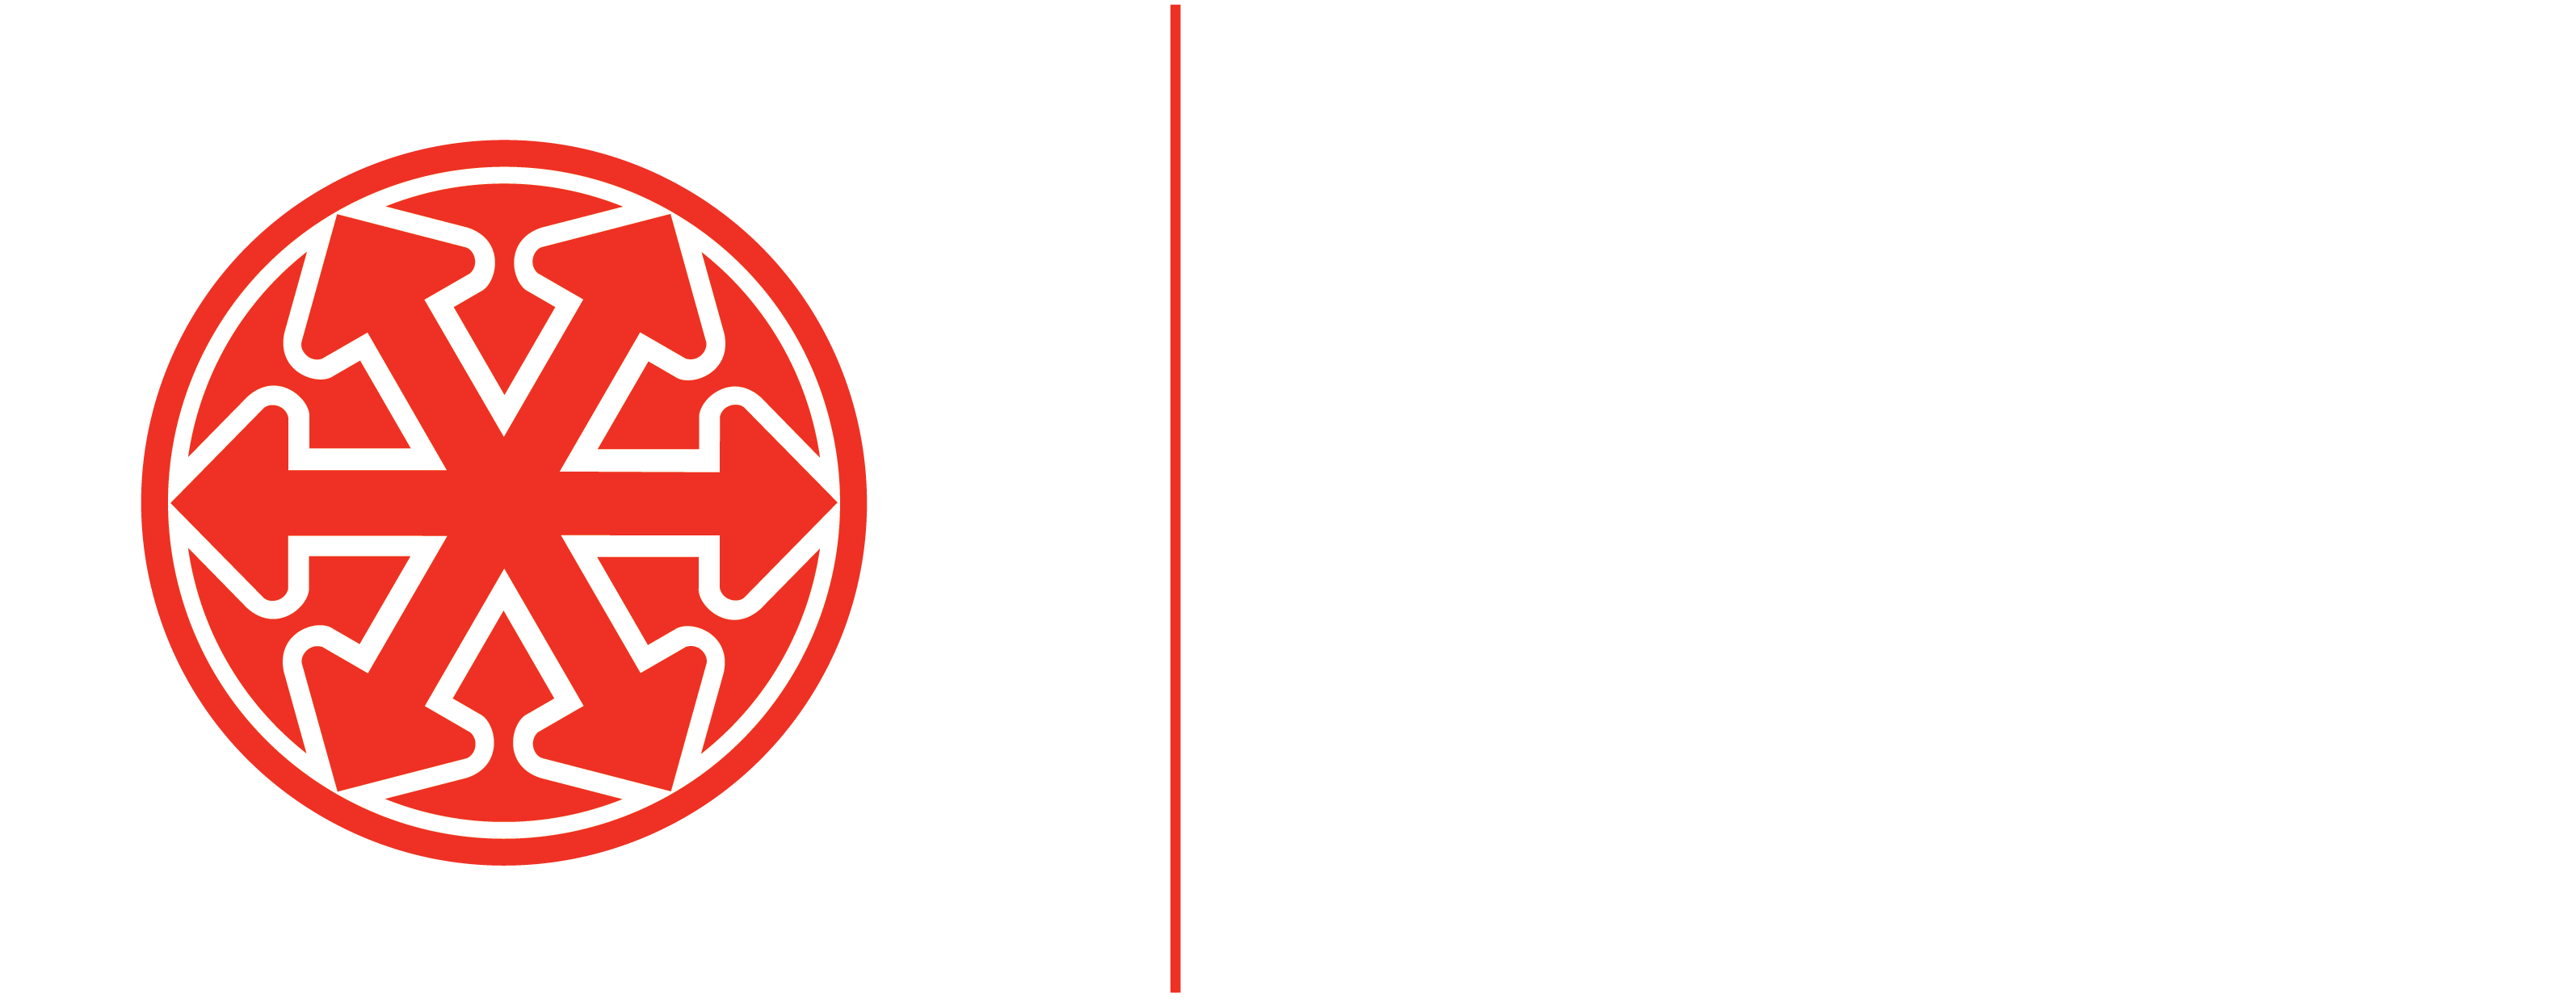 NFPA ed tech foundation logo white type large